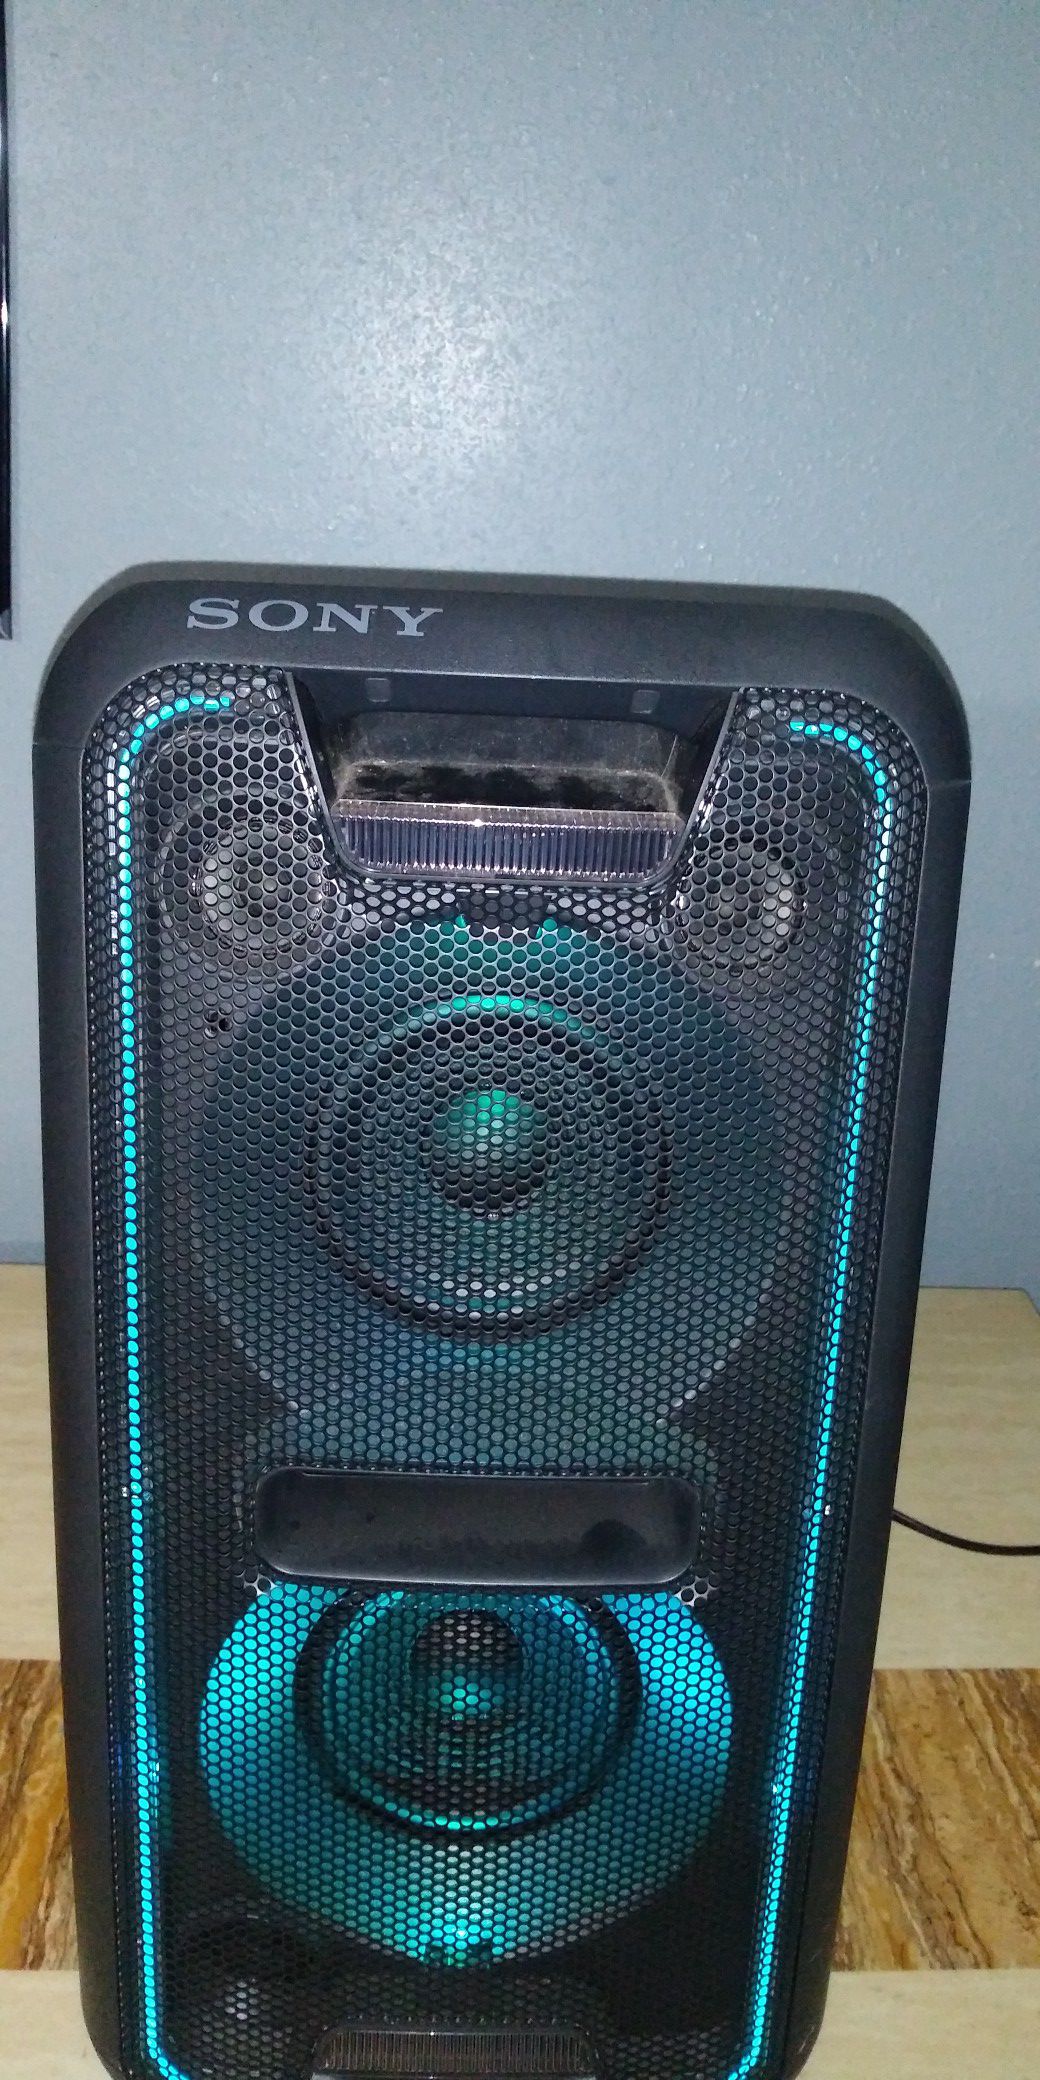 Sony Bluetooth speaker.